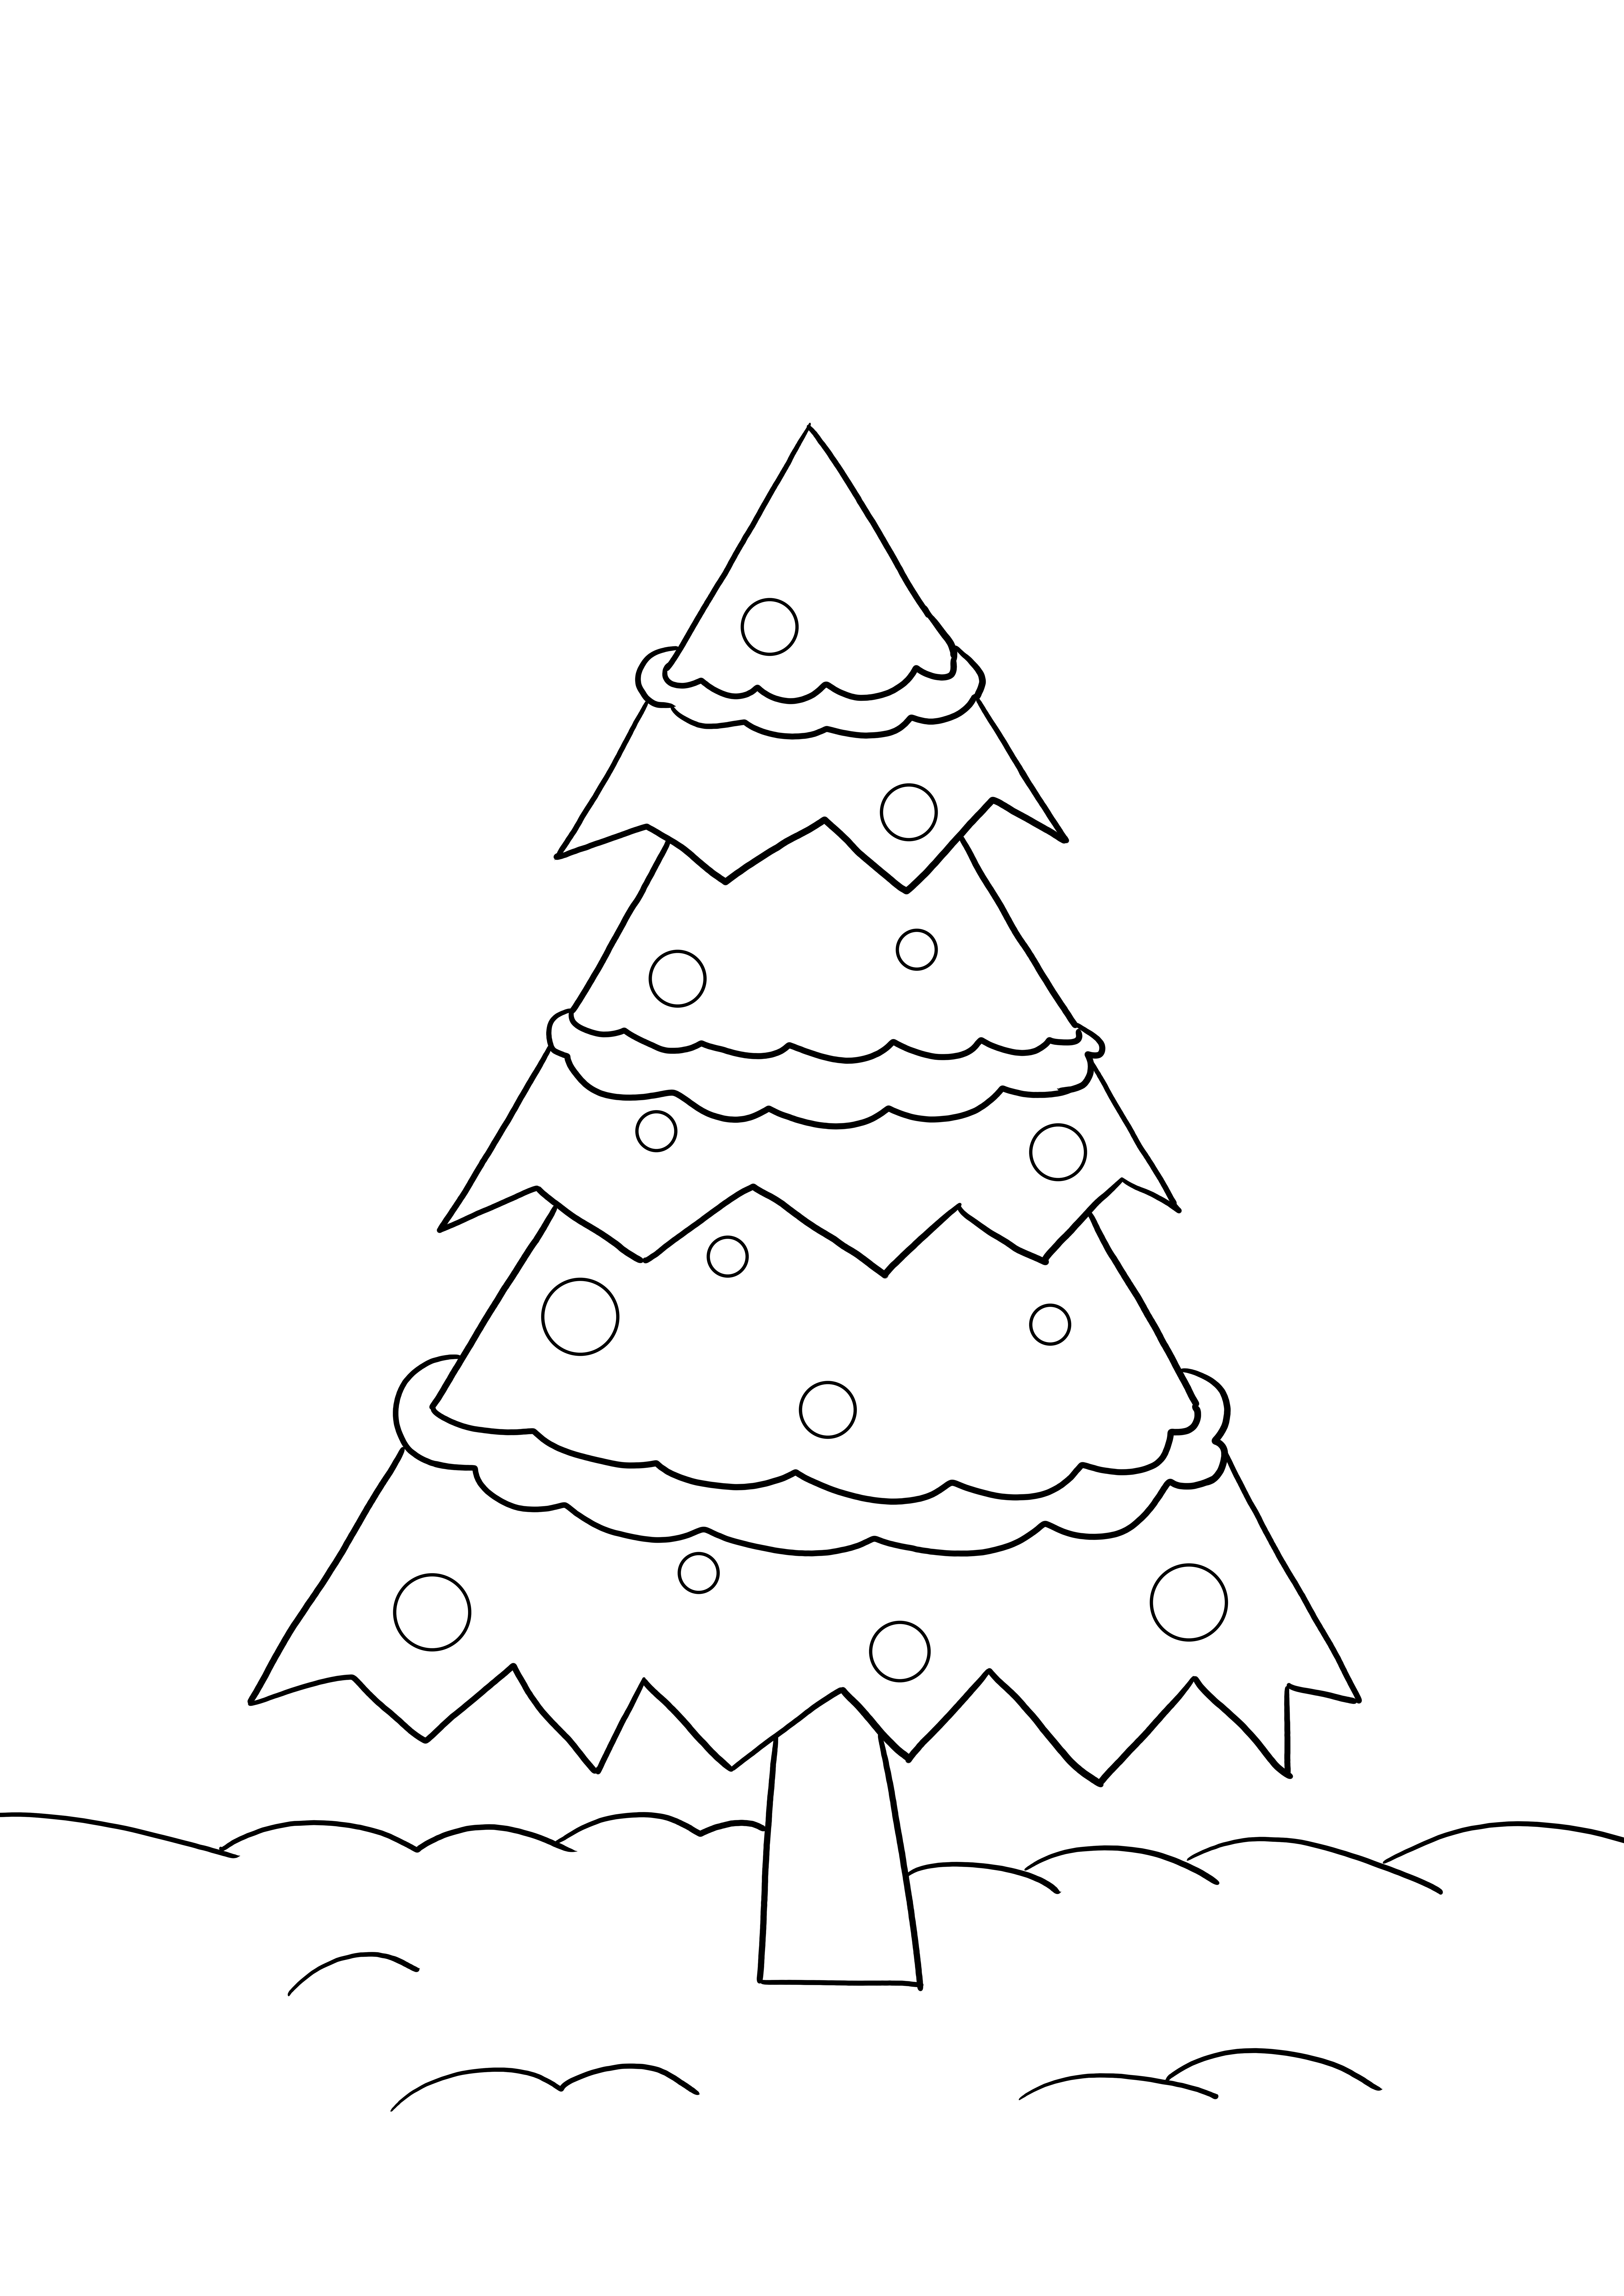 Folha de colorir de árvore de natal simples para imprimir ou salvar gratuitamente